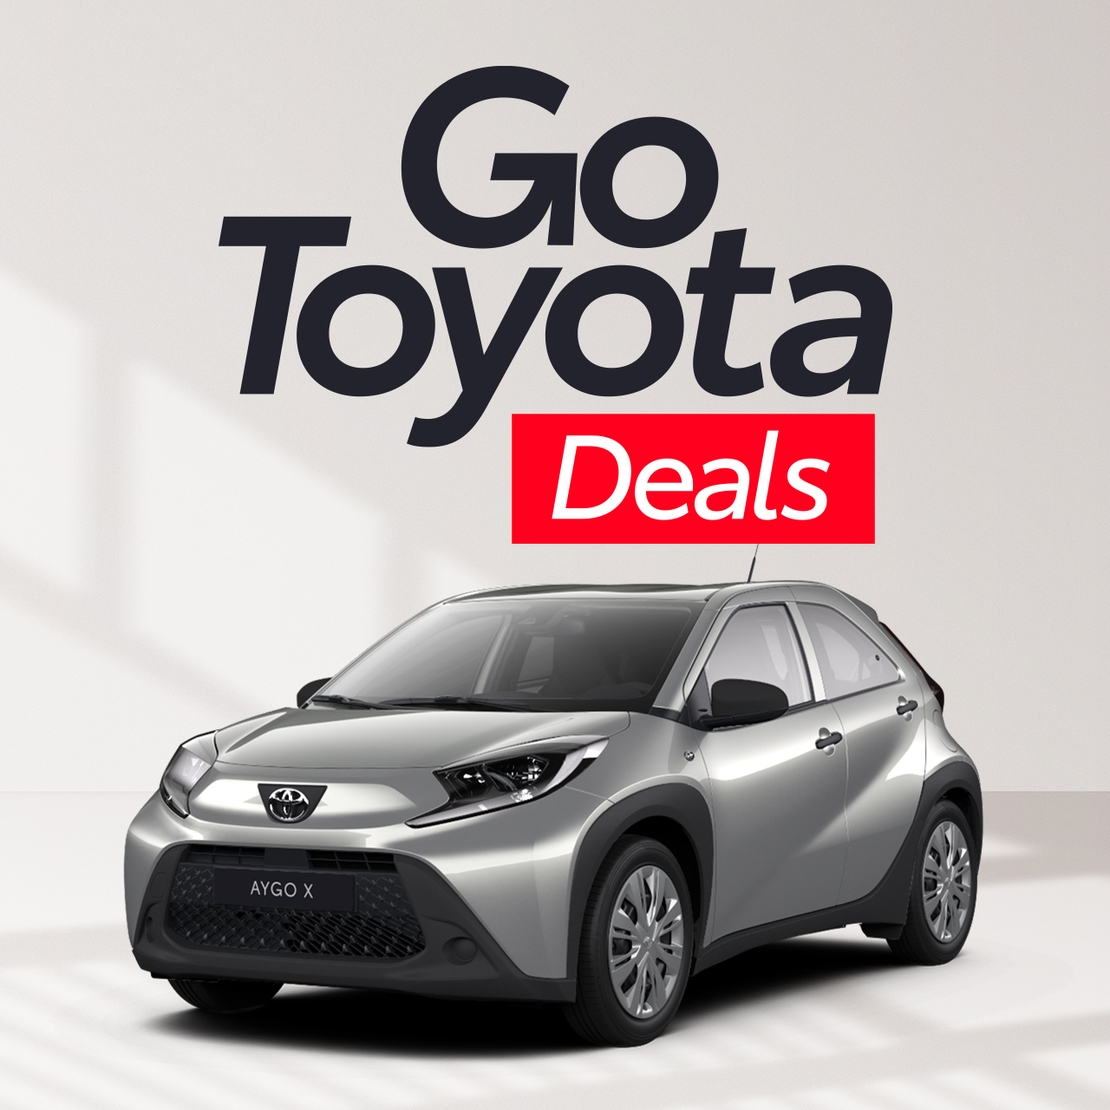 Toyota-Aygo-X-GoToyotaDeals-logo